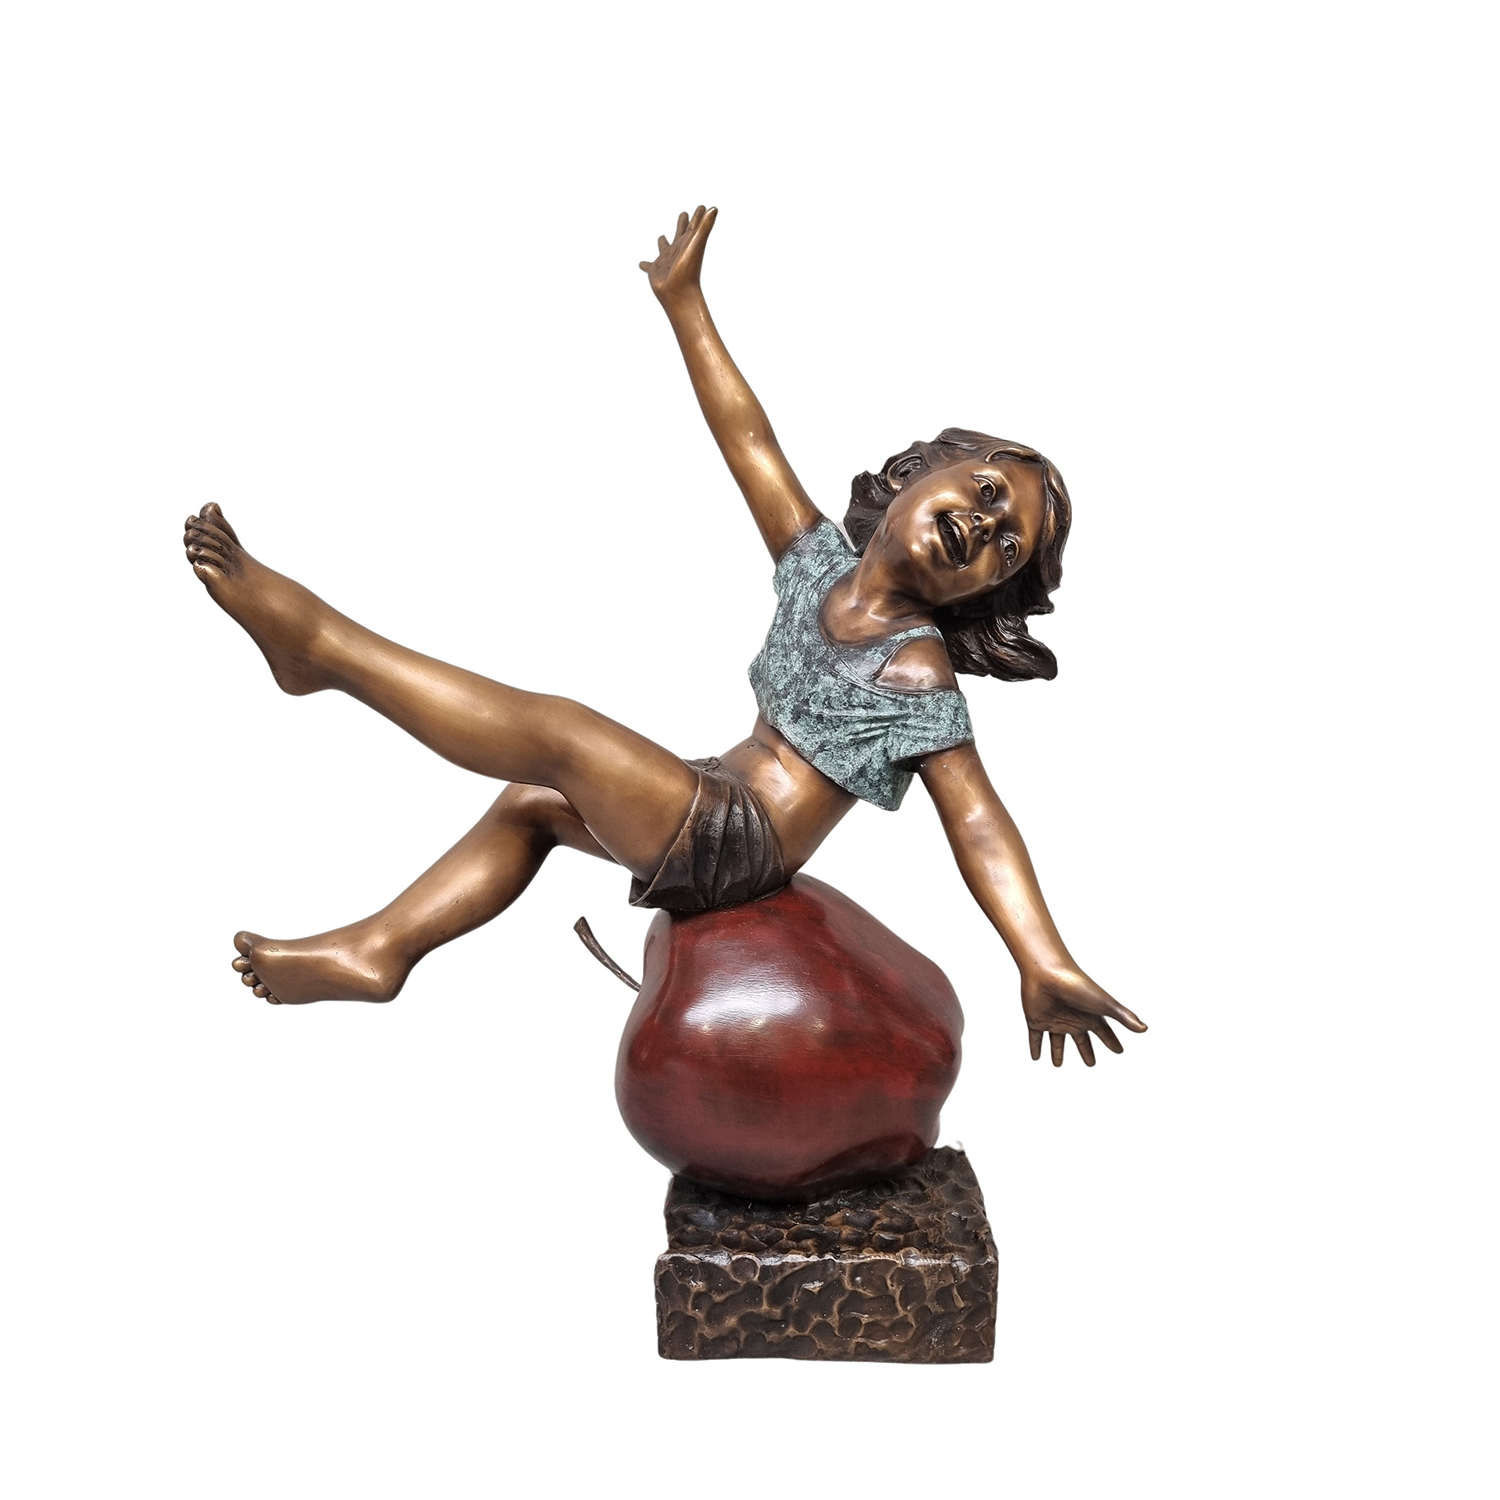 Girl Sitting on an Apple Sculpture